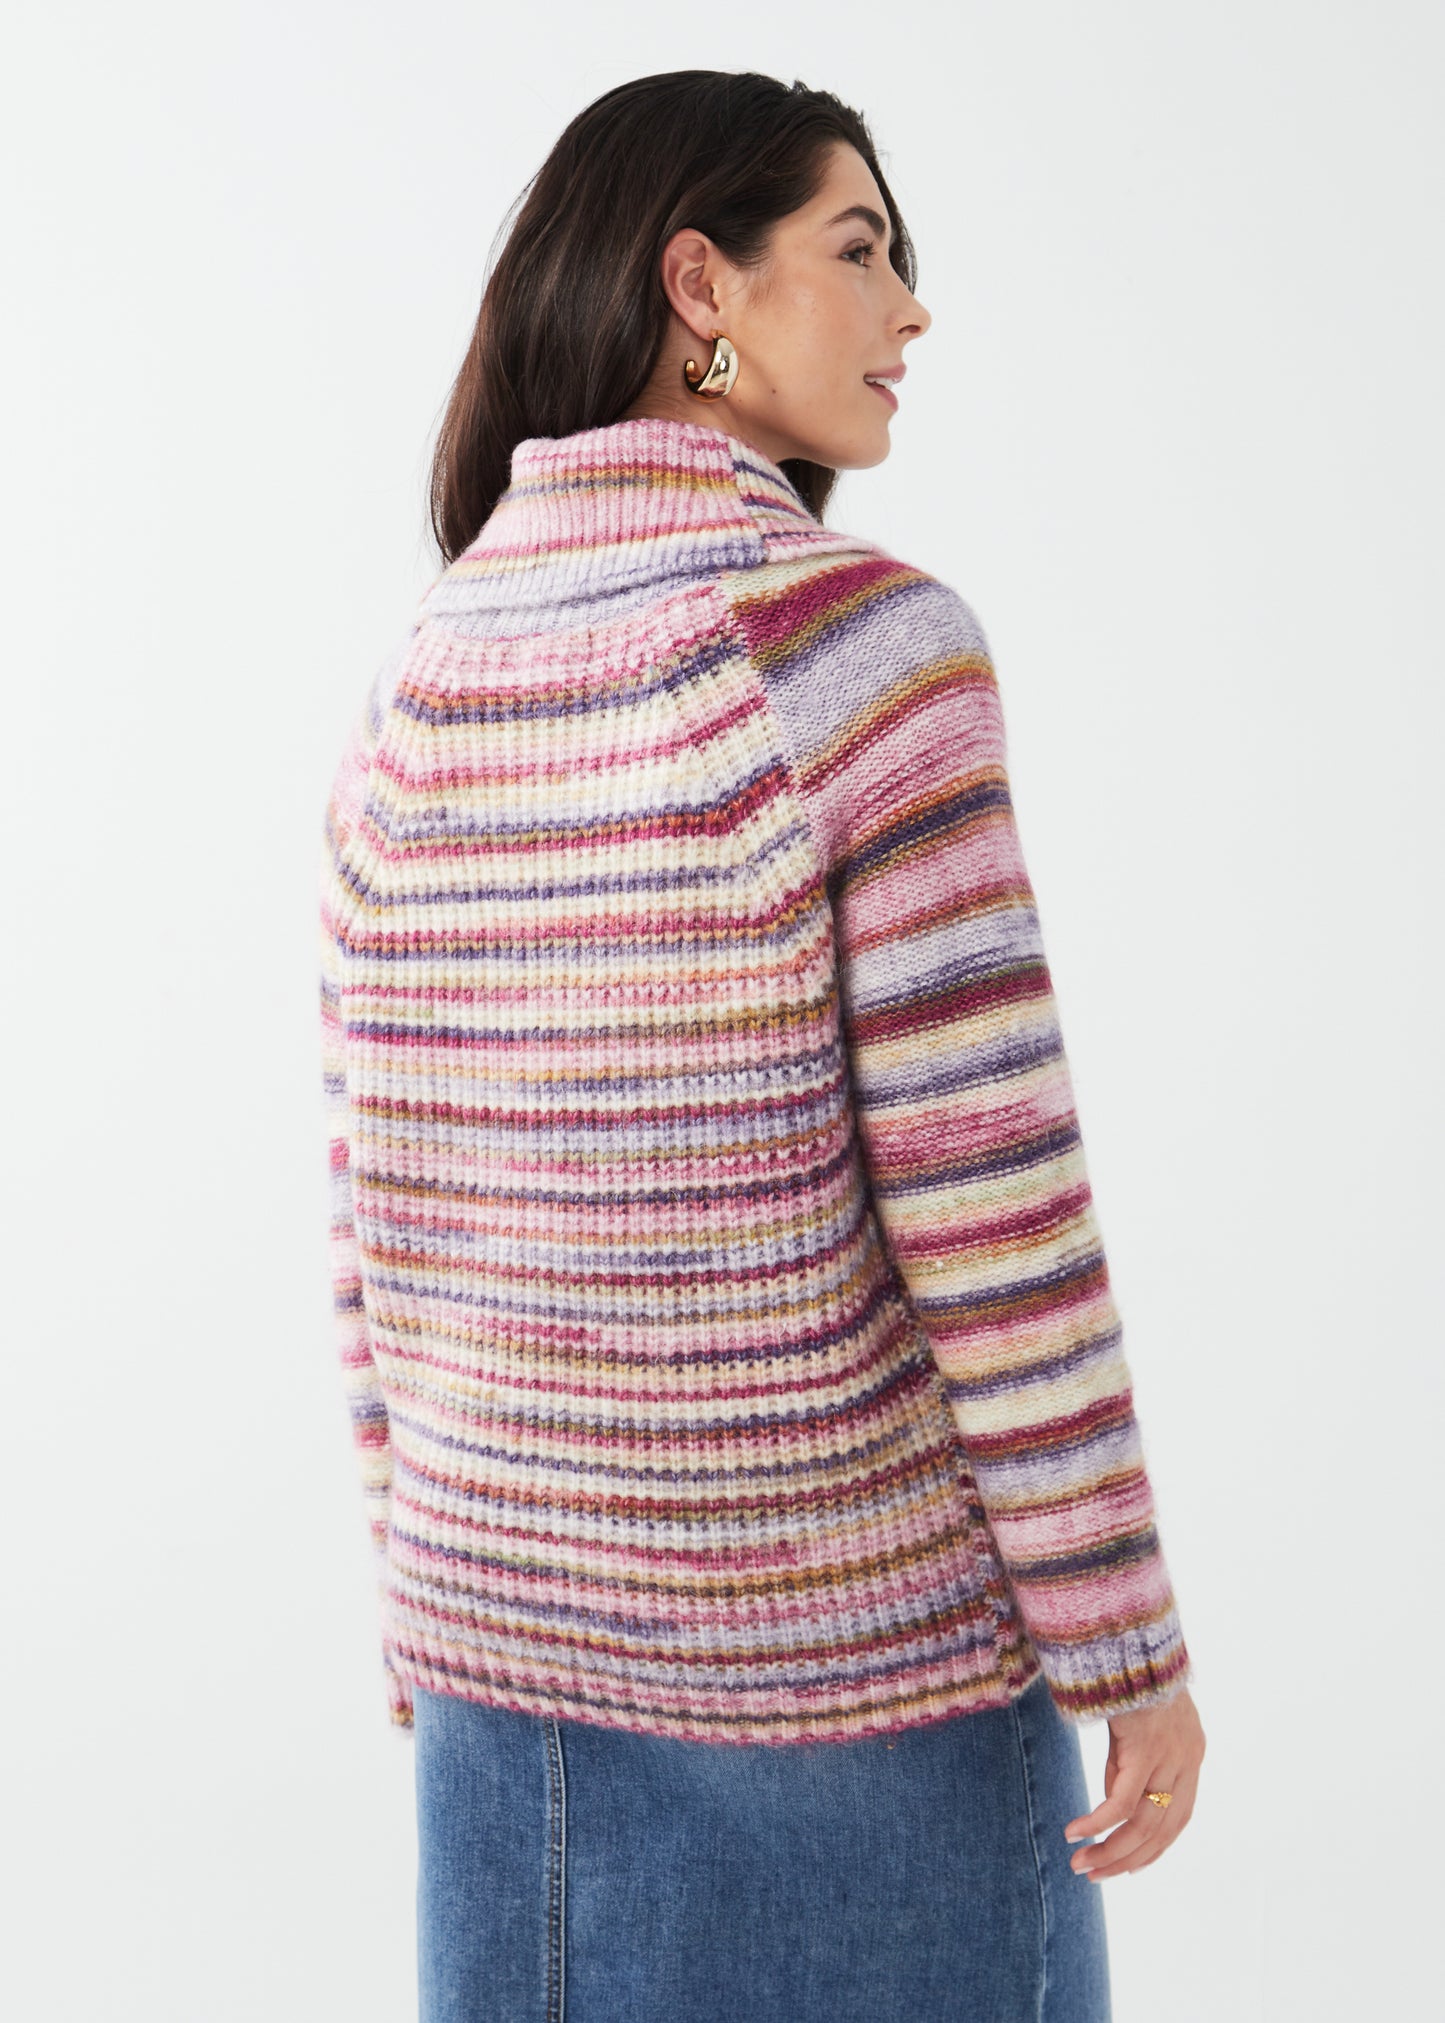 The Carla Stripe Sweater (Final Sale)